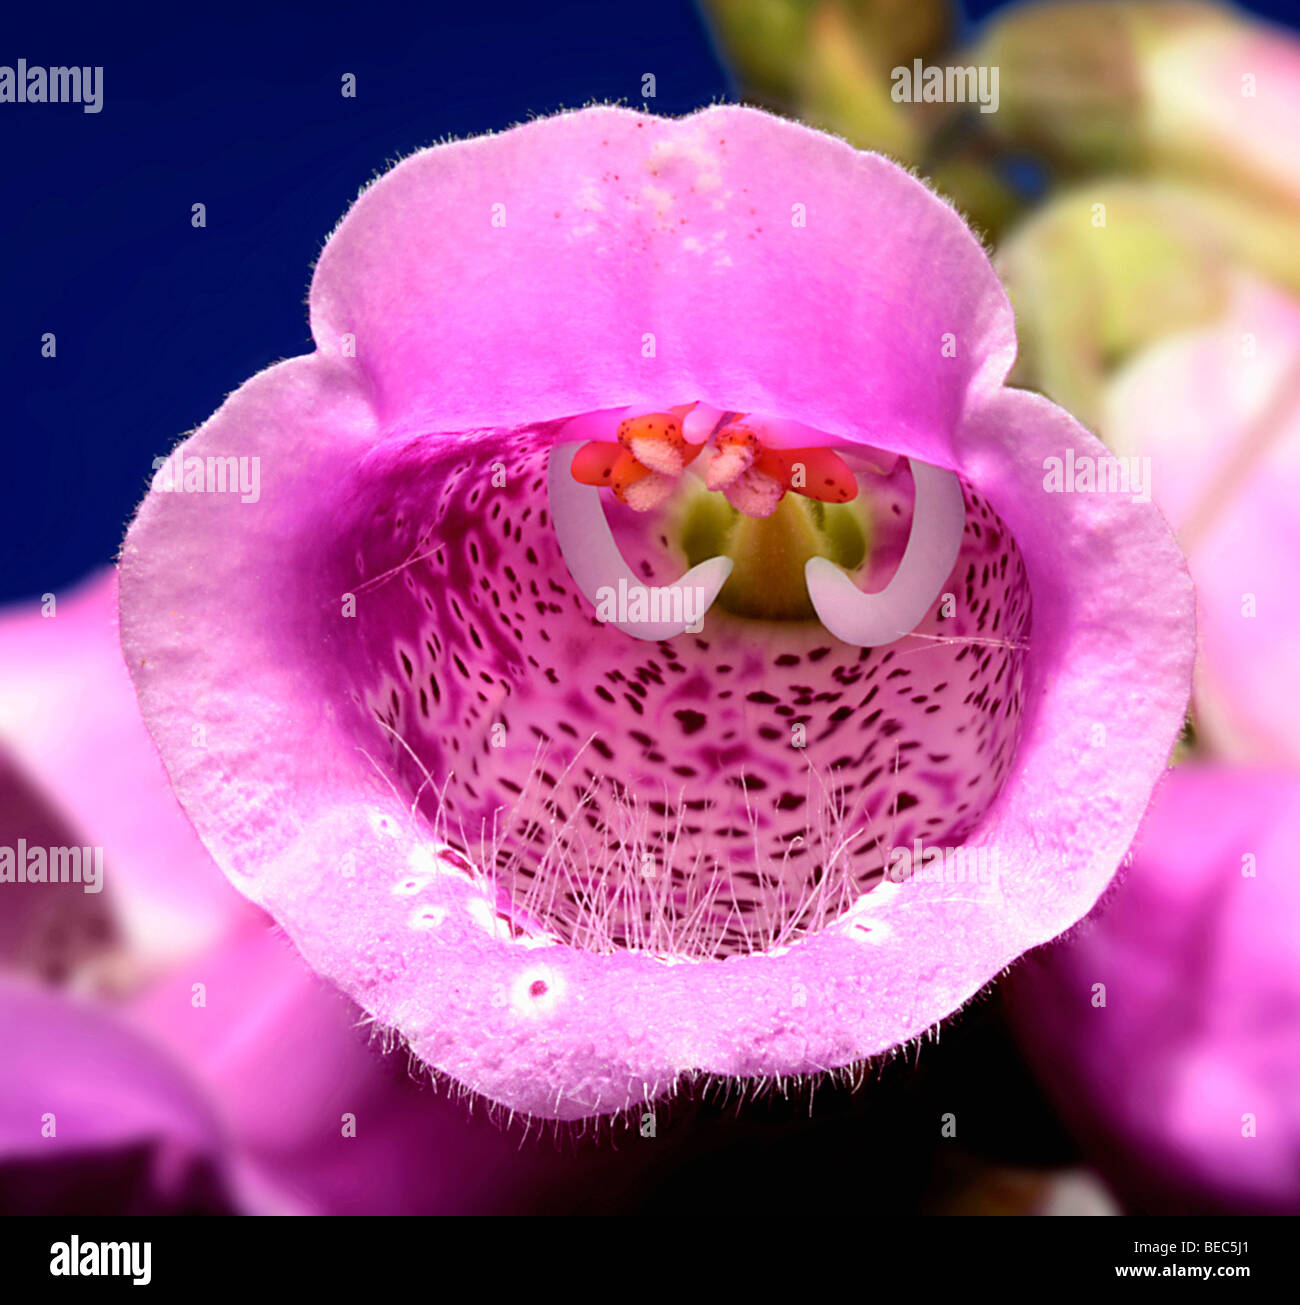 foxglove digitalis purpurea close-up Stock Photo